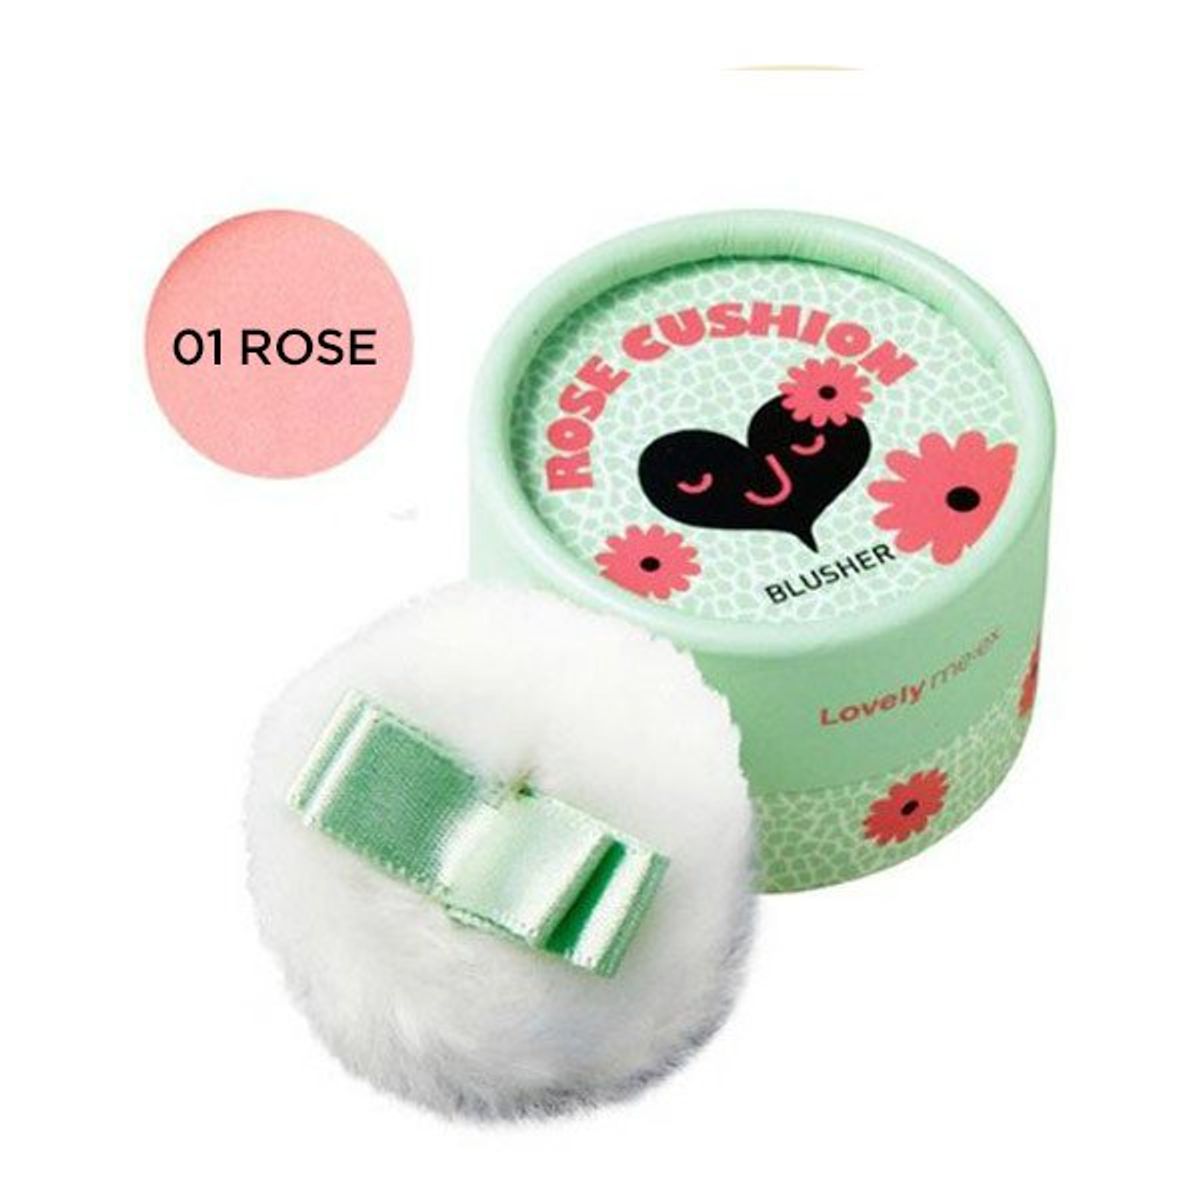 lovely-meex-pastel-cushion-blusher-01-rose-cushion-1